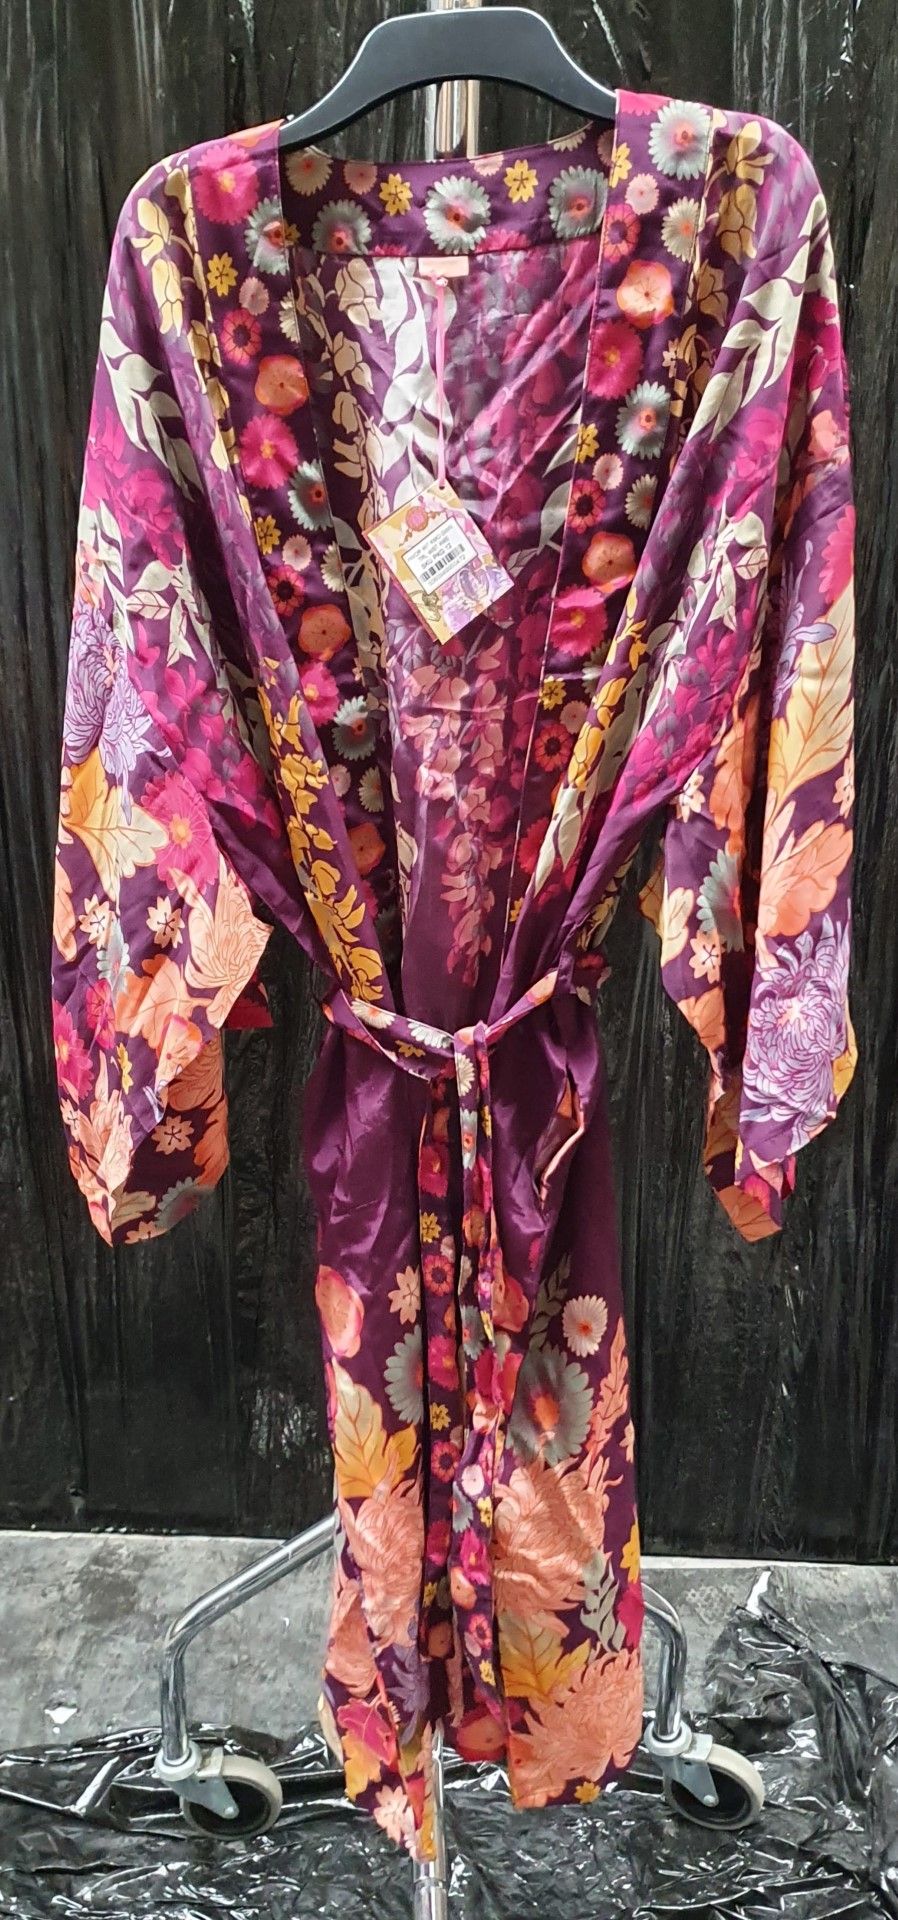 4 x Powder Kimono Style Gowns- Folk Art Petal Finish 100% Viscose Fabric - Adult One Size - New - Image 9 of 11